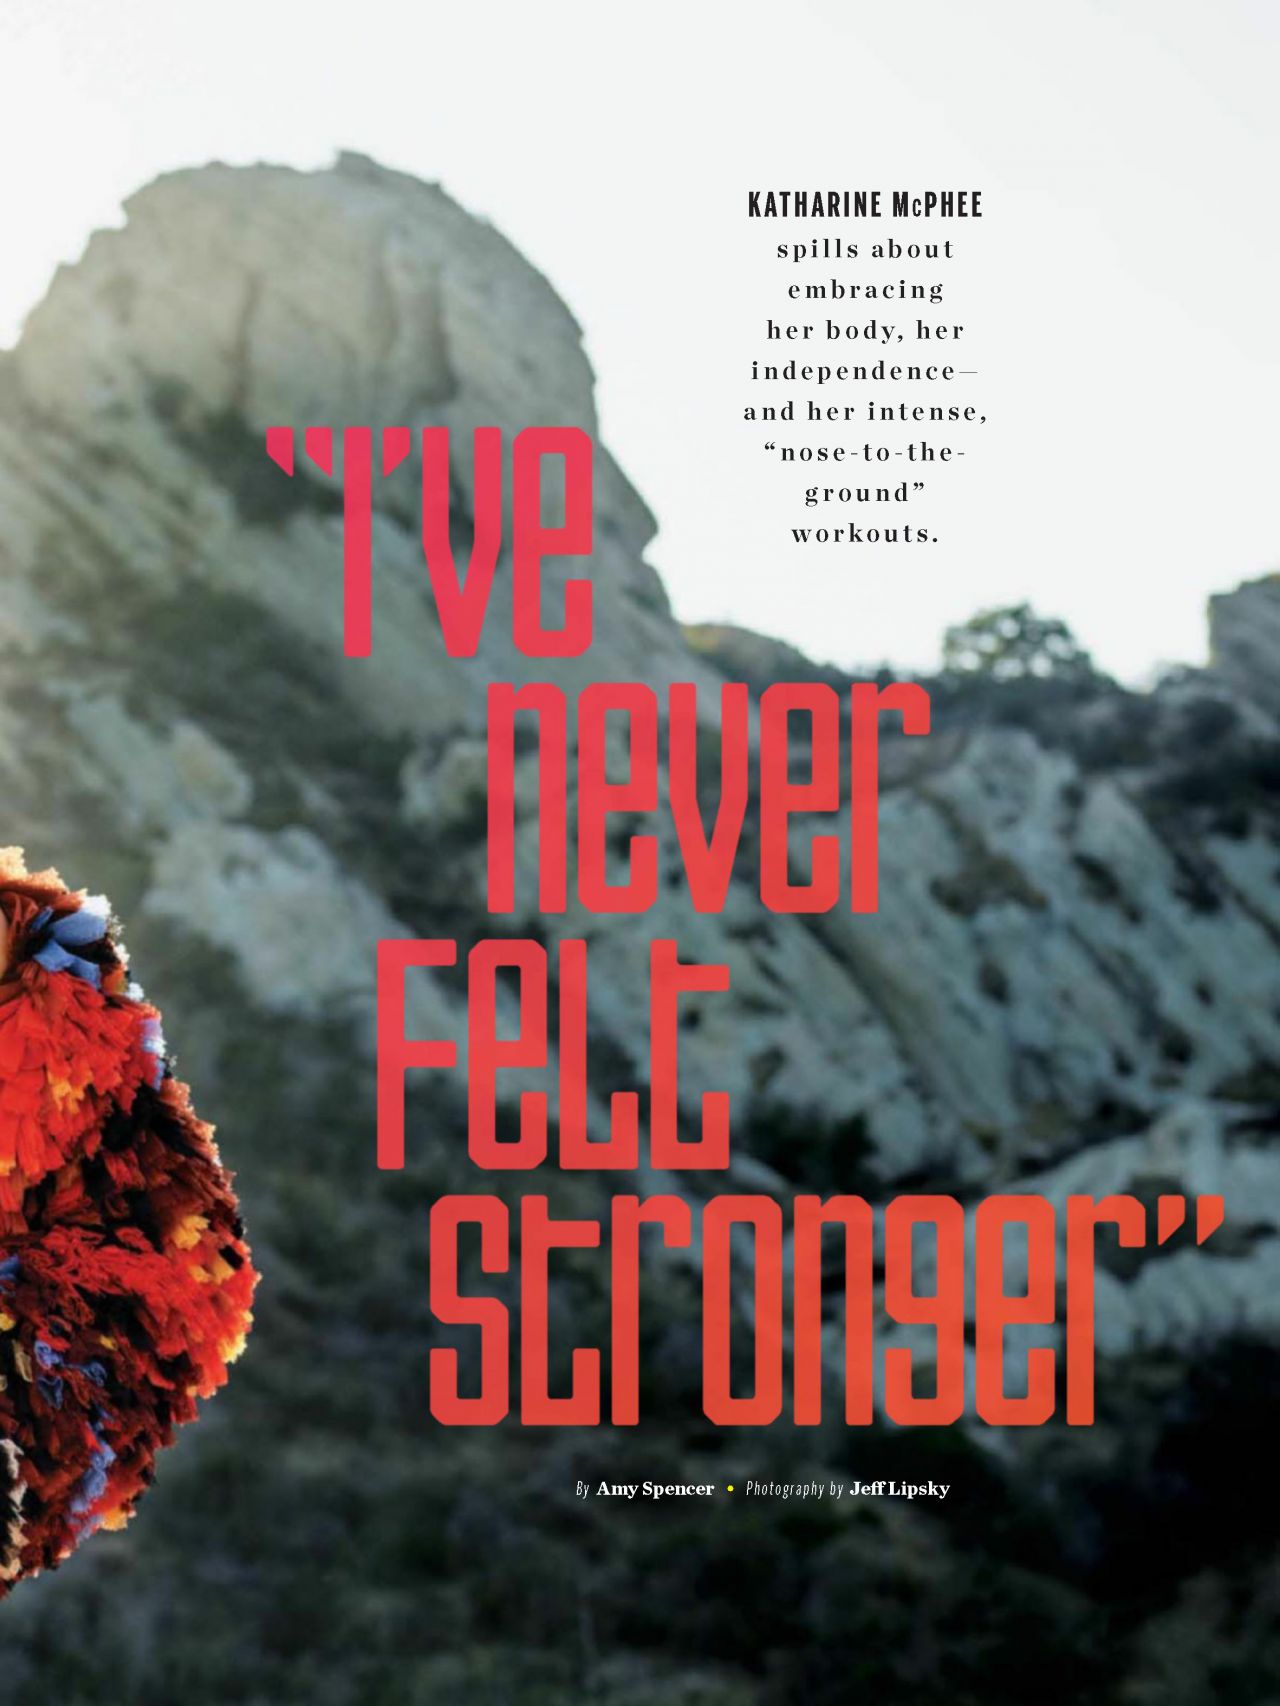 Katharine McPhee on the cover of Health Magazine December 